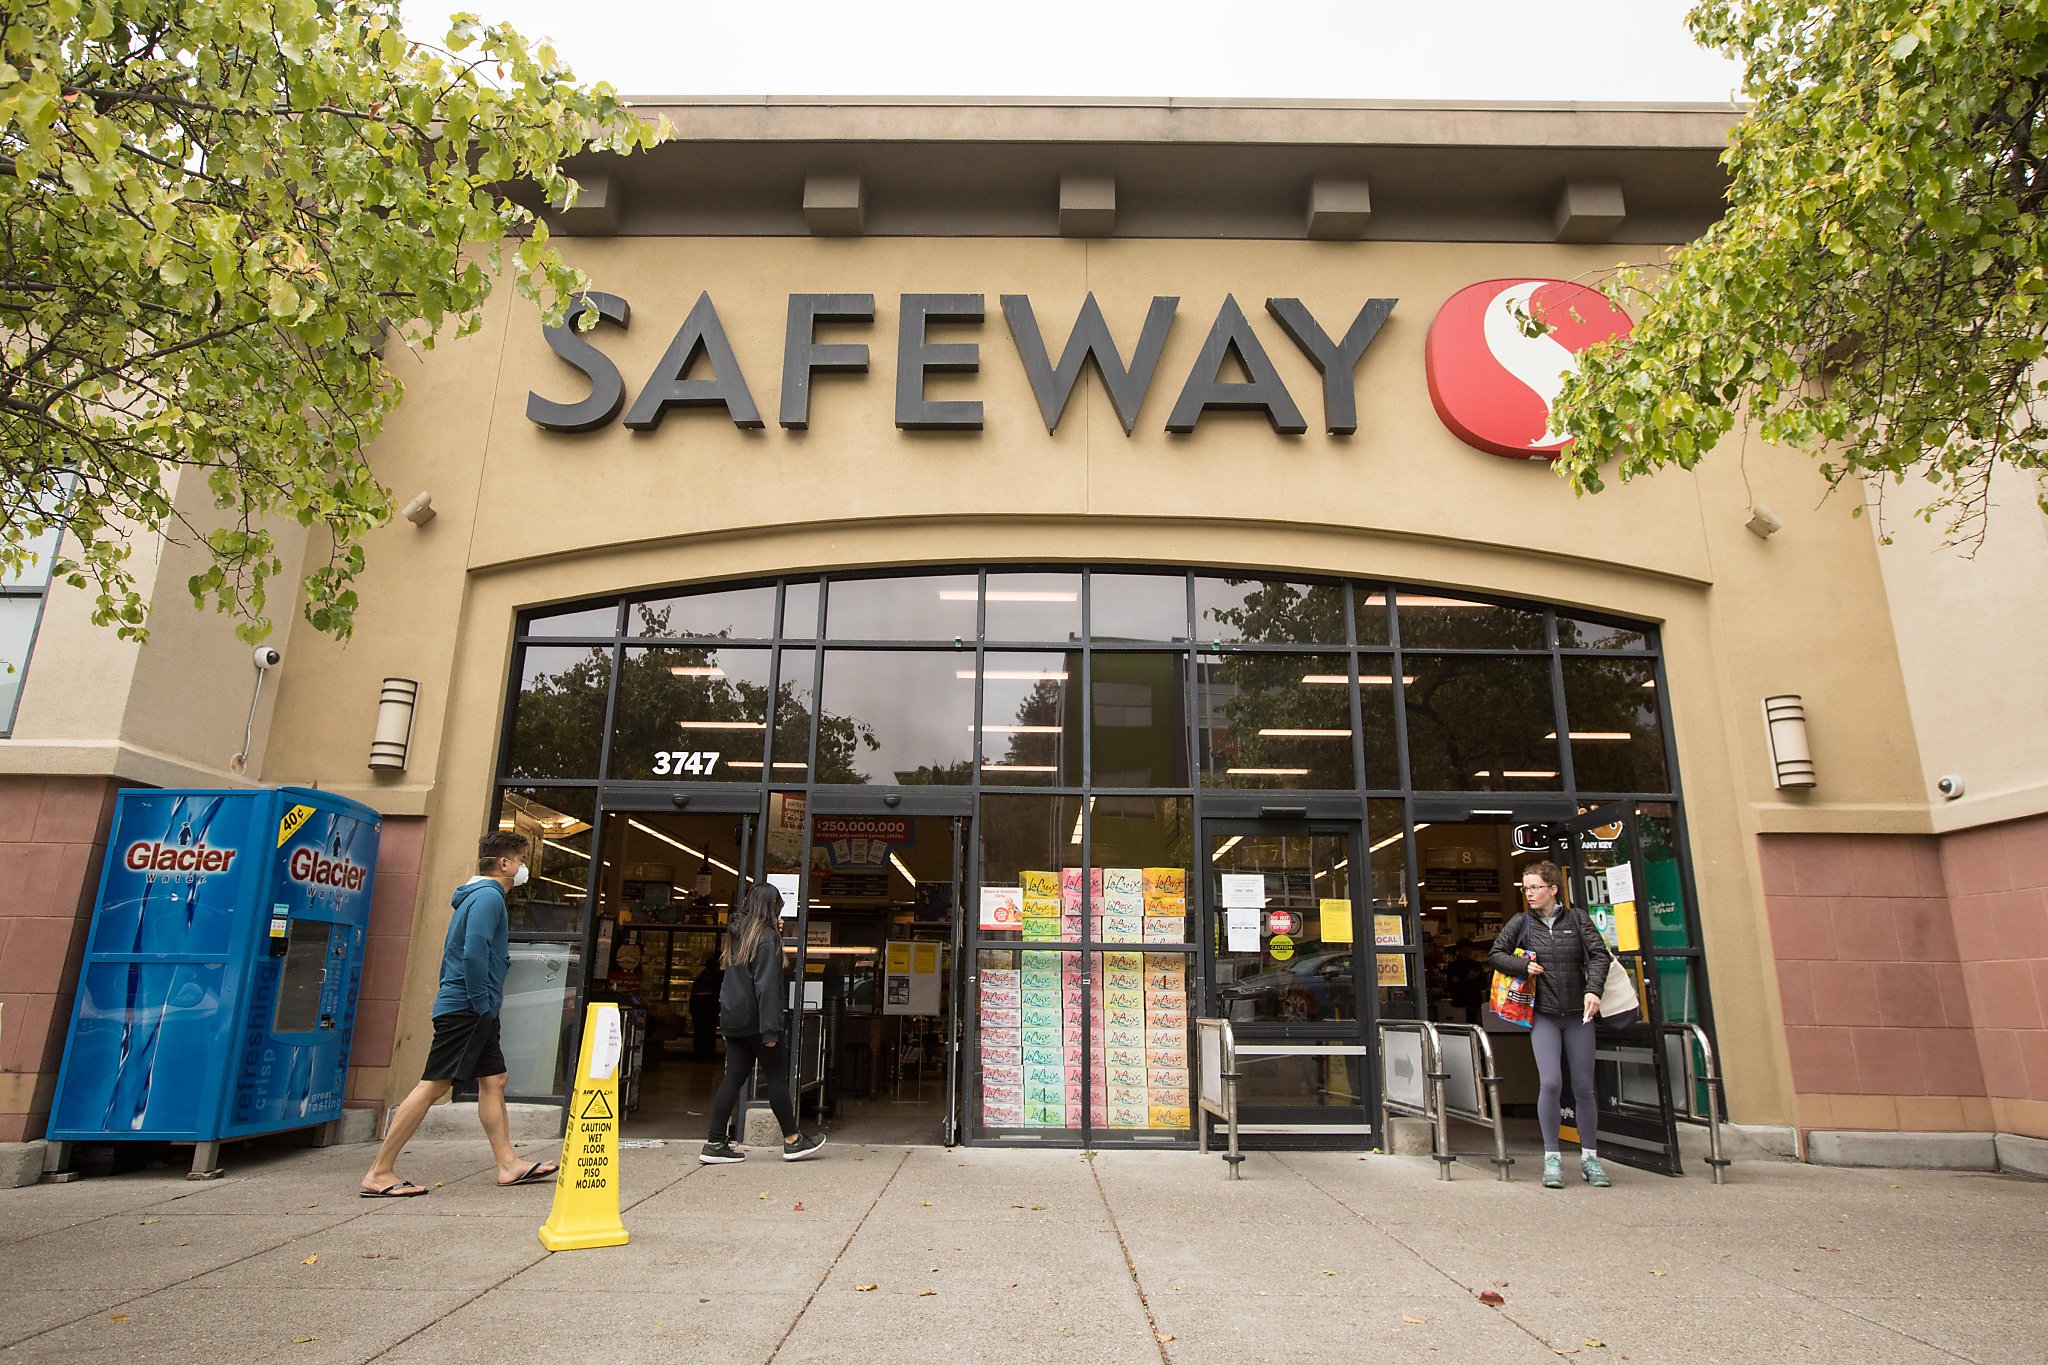 160 shopping carts were stolen from a San Francisco Safeway